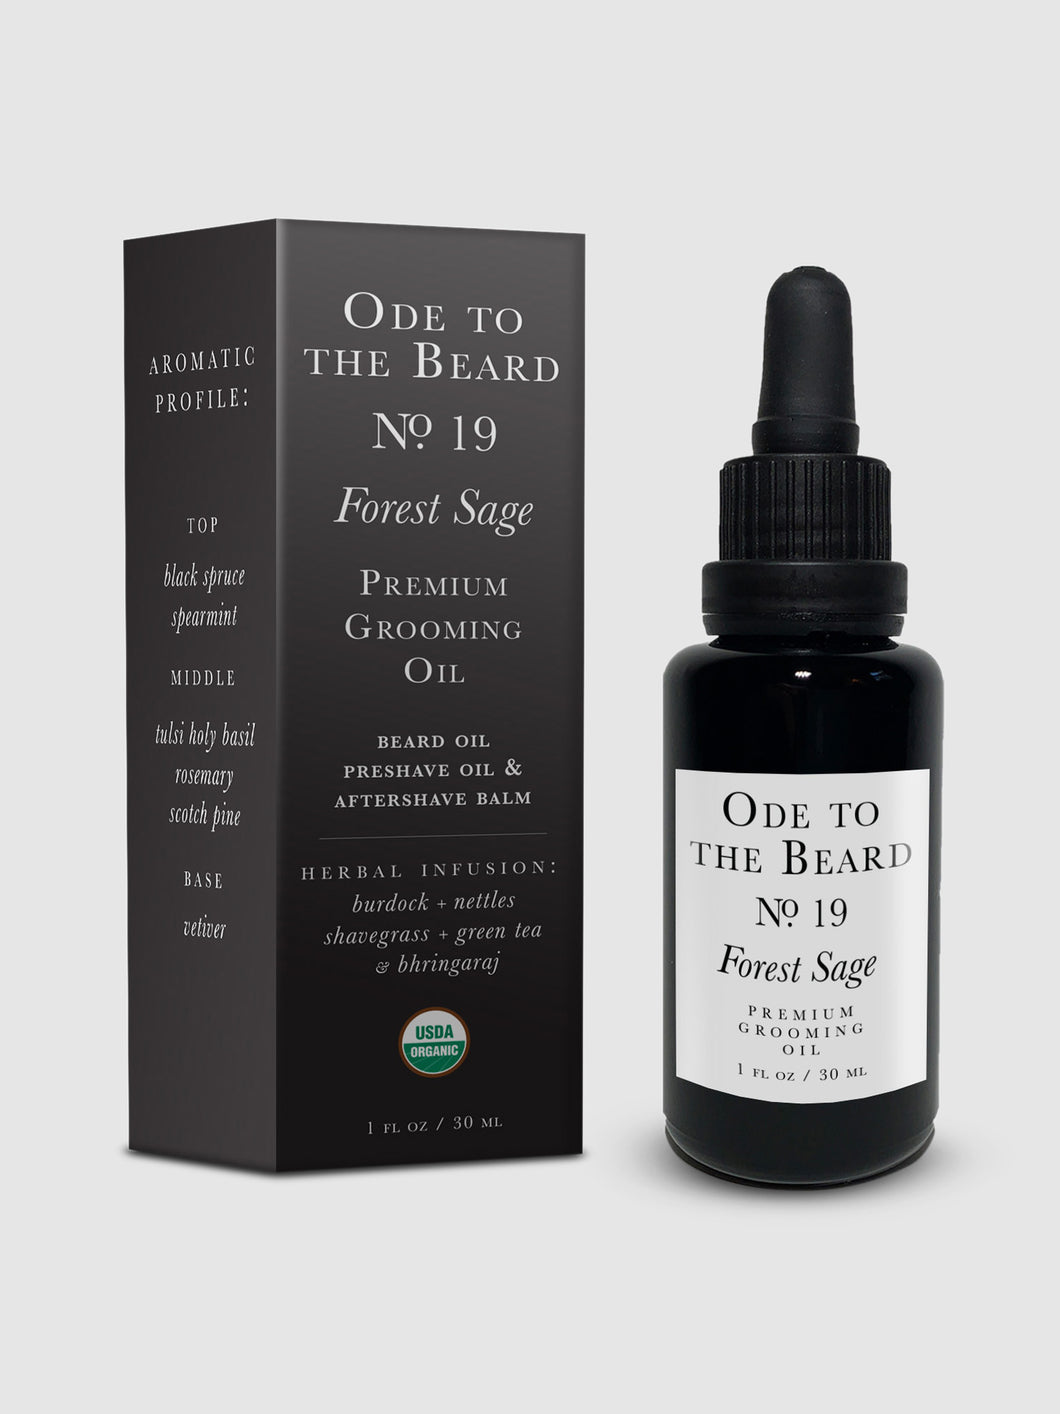 Forest Sage Noº 19 Premium Grooming Oil